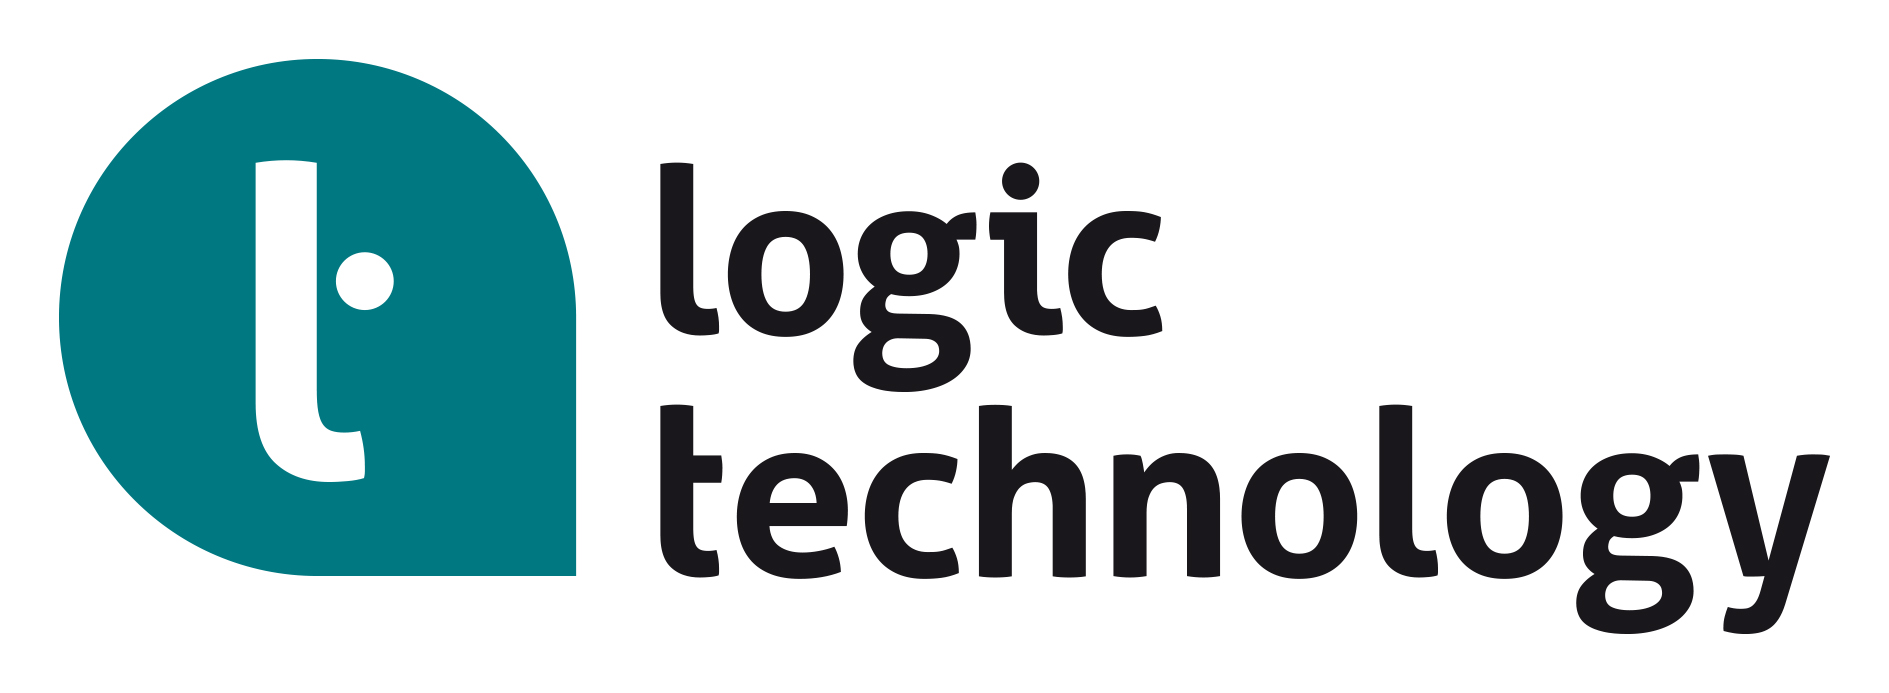 Logic technology logo